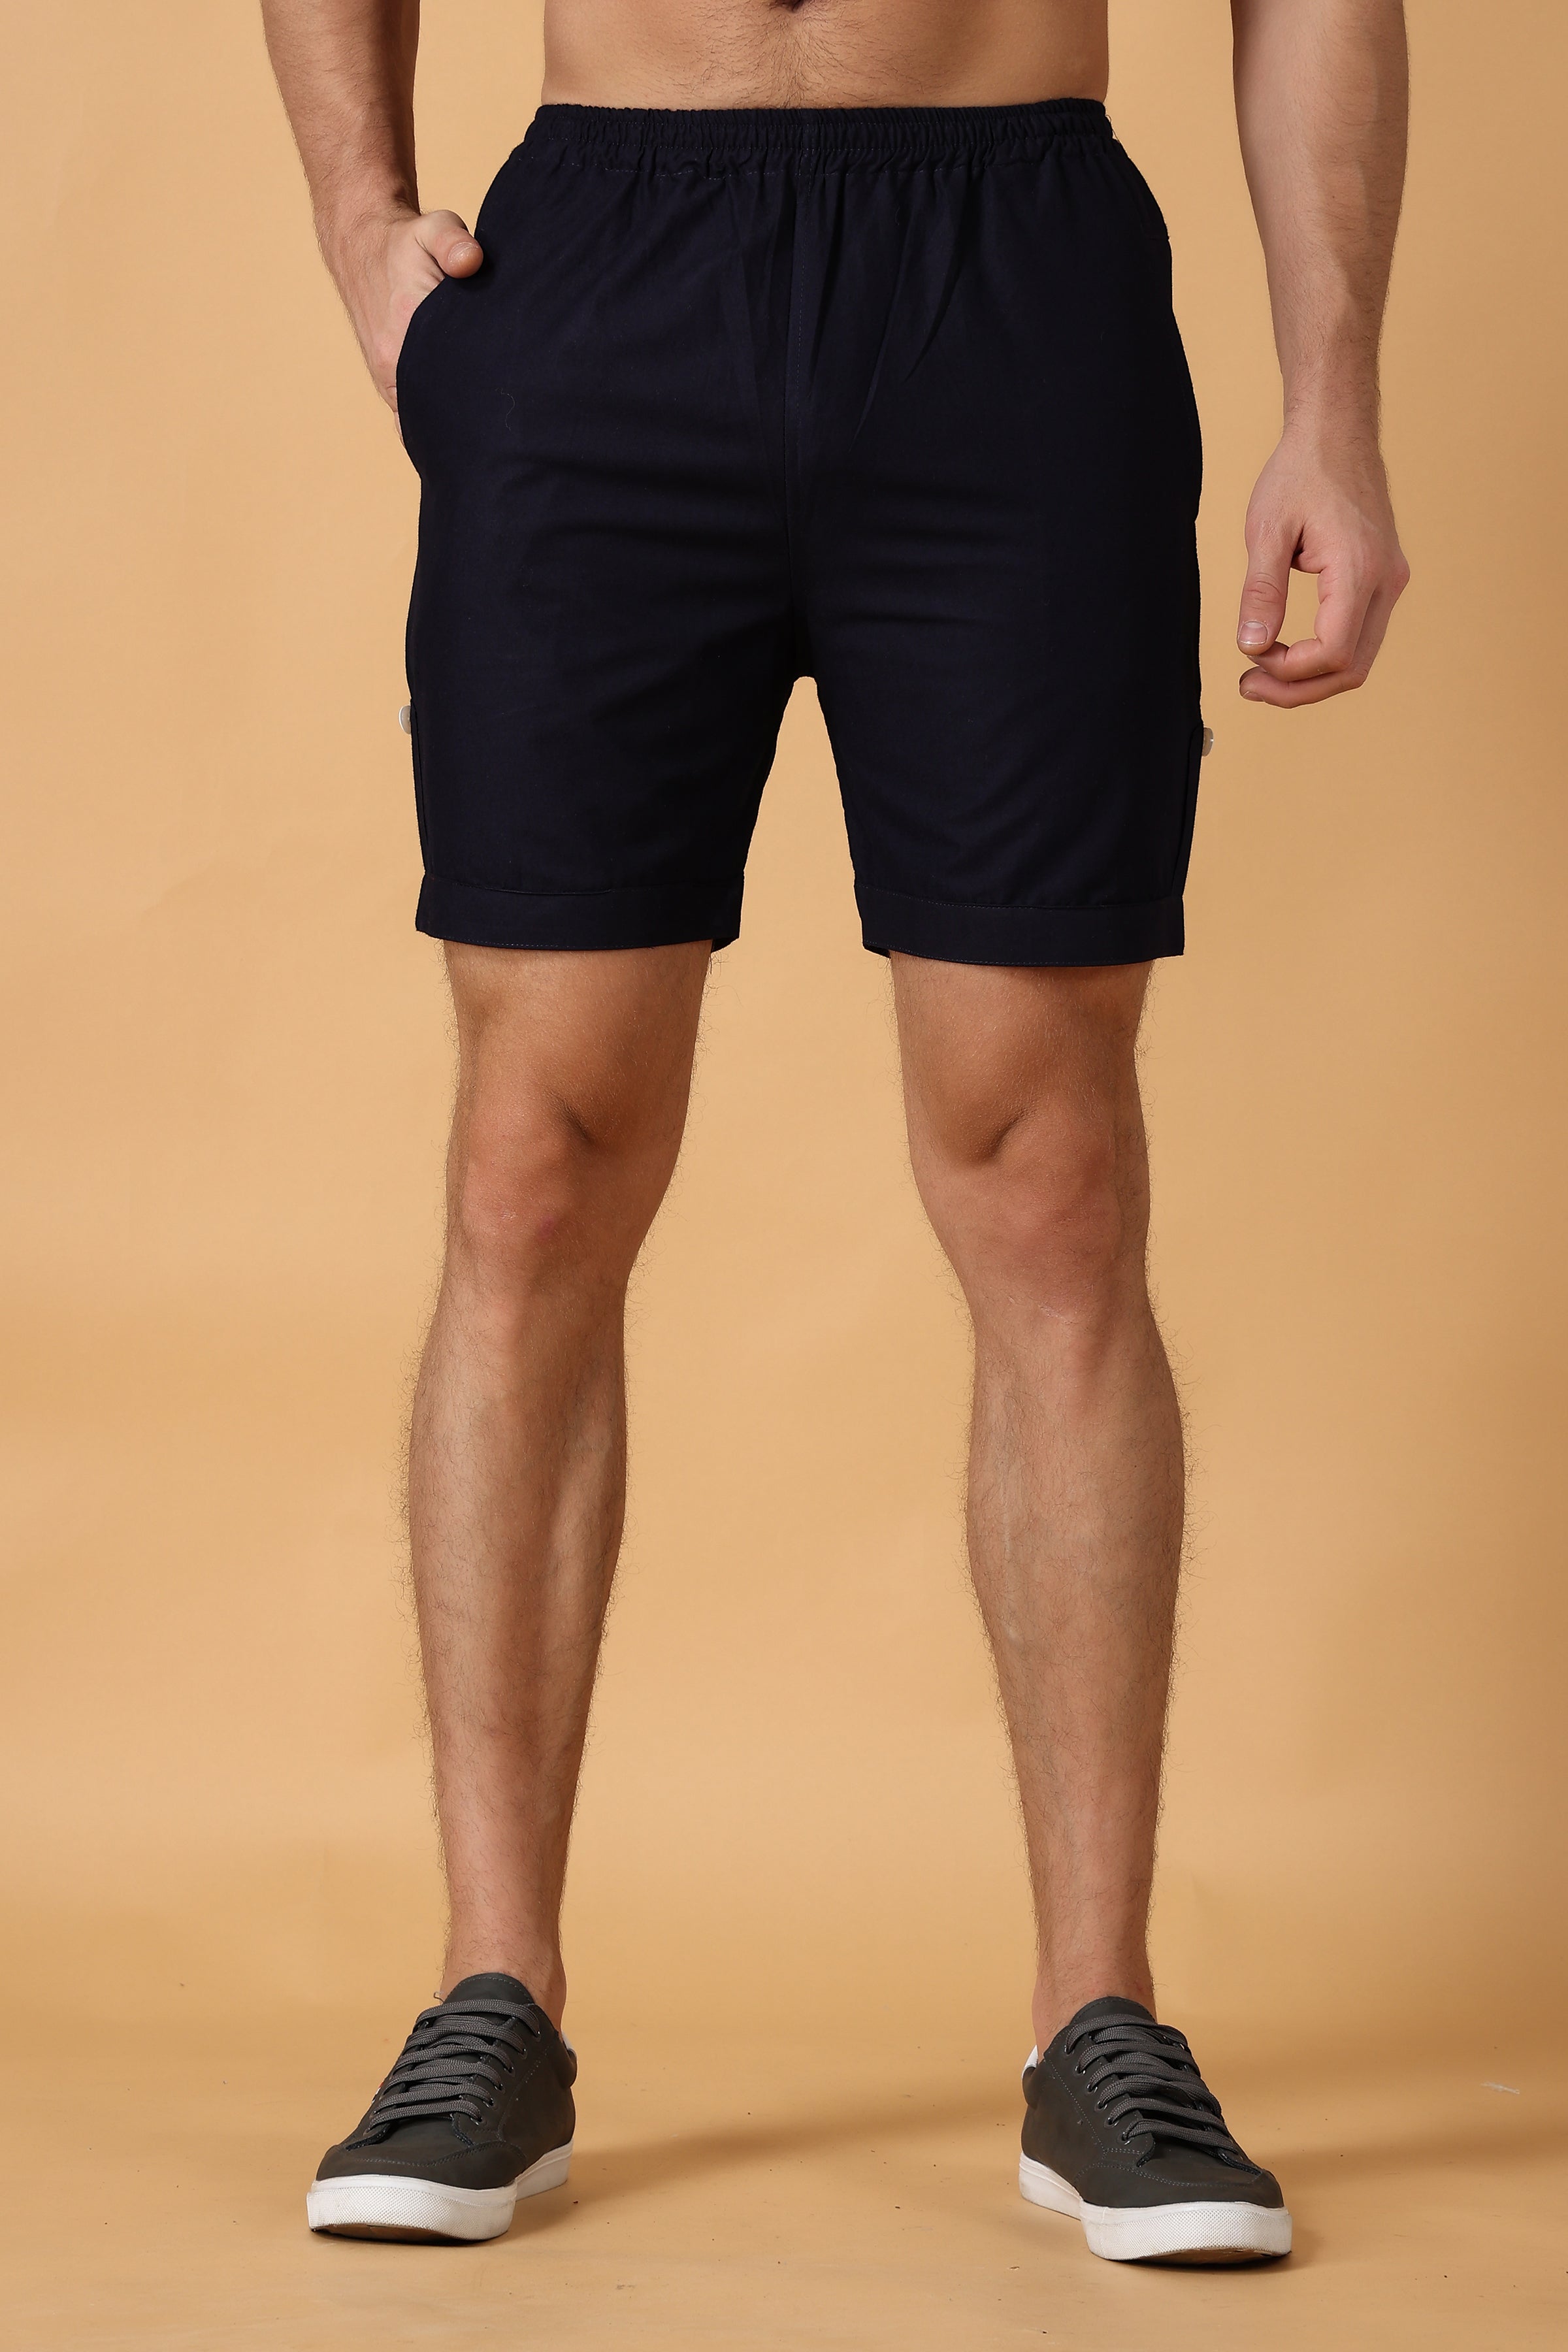 Buy Charcoal Grey Shorts  34ths for Men by Teamspirit Online  Ajiocom